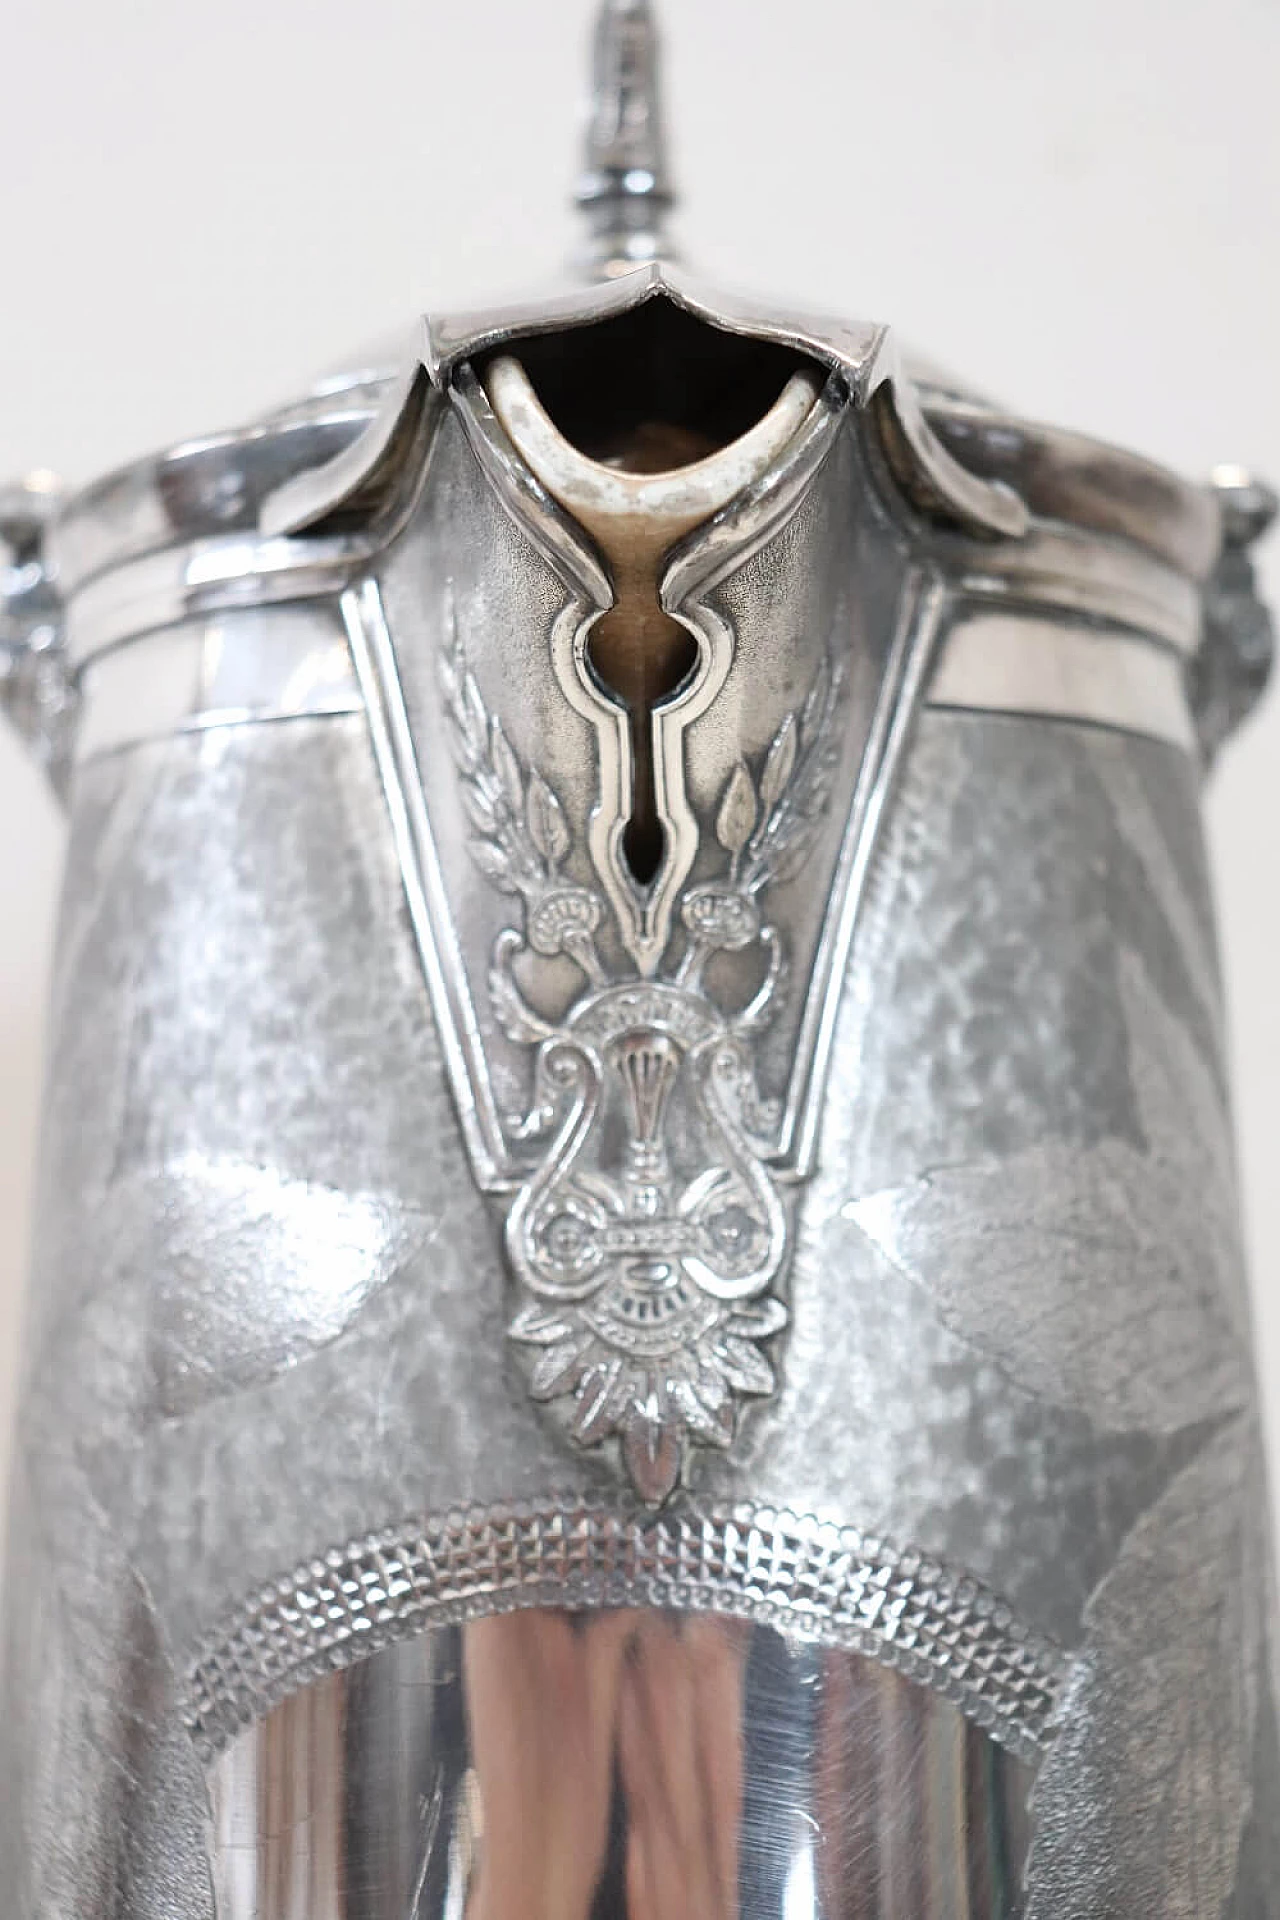 Caraffa placcata argento con marchio Reed & Barton, '800 5